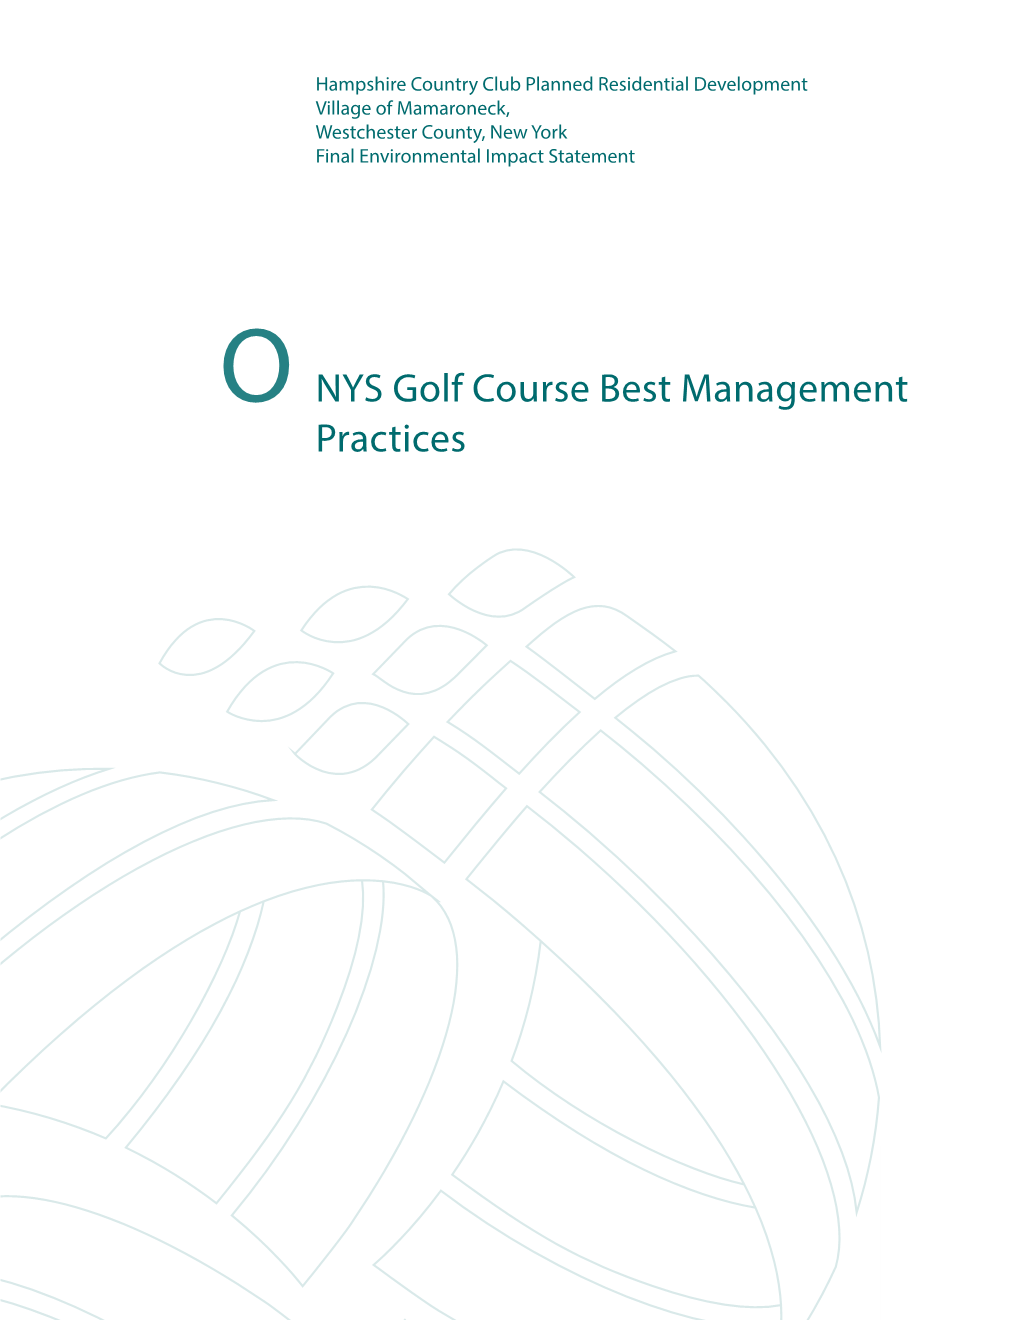 NYS Golf Course Best Management Practices Best Management Practices for New York State Golf Courses